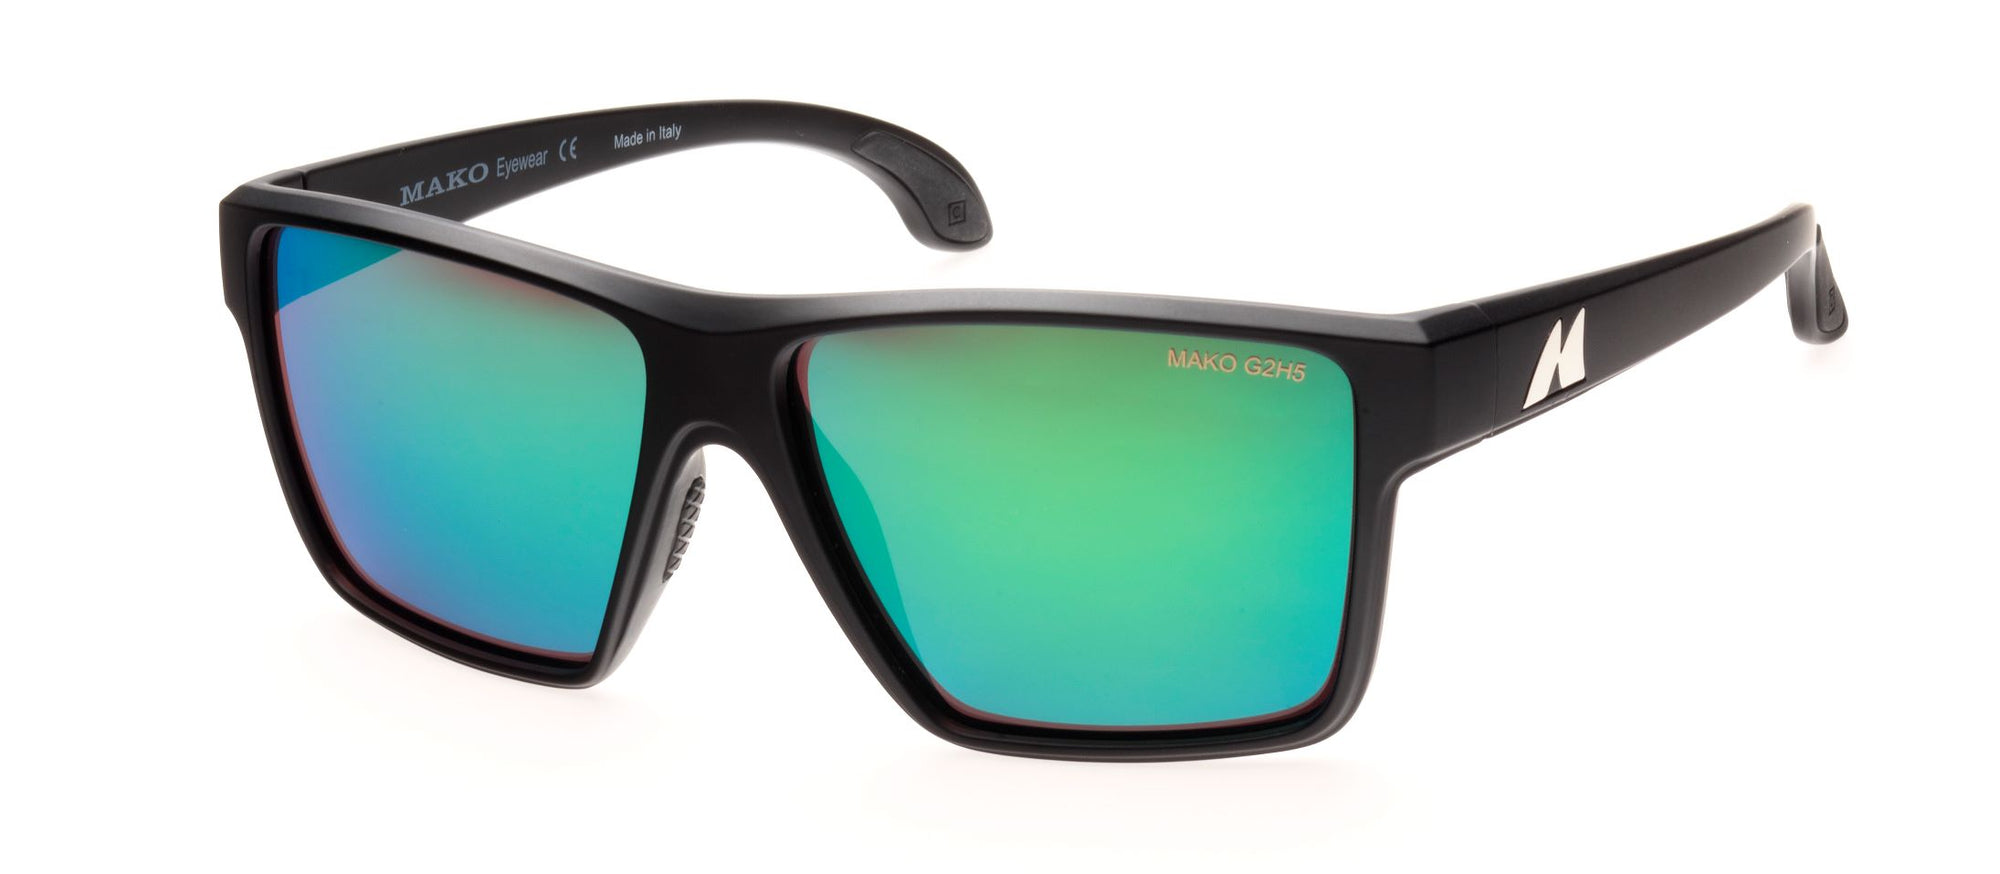 Mako CAST 9611 Sunglasses - Matte Black Frame, HD Glass Rose Green Mirror Lense